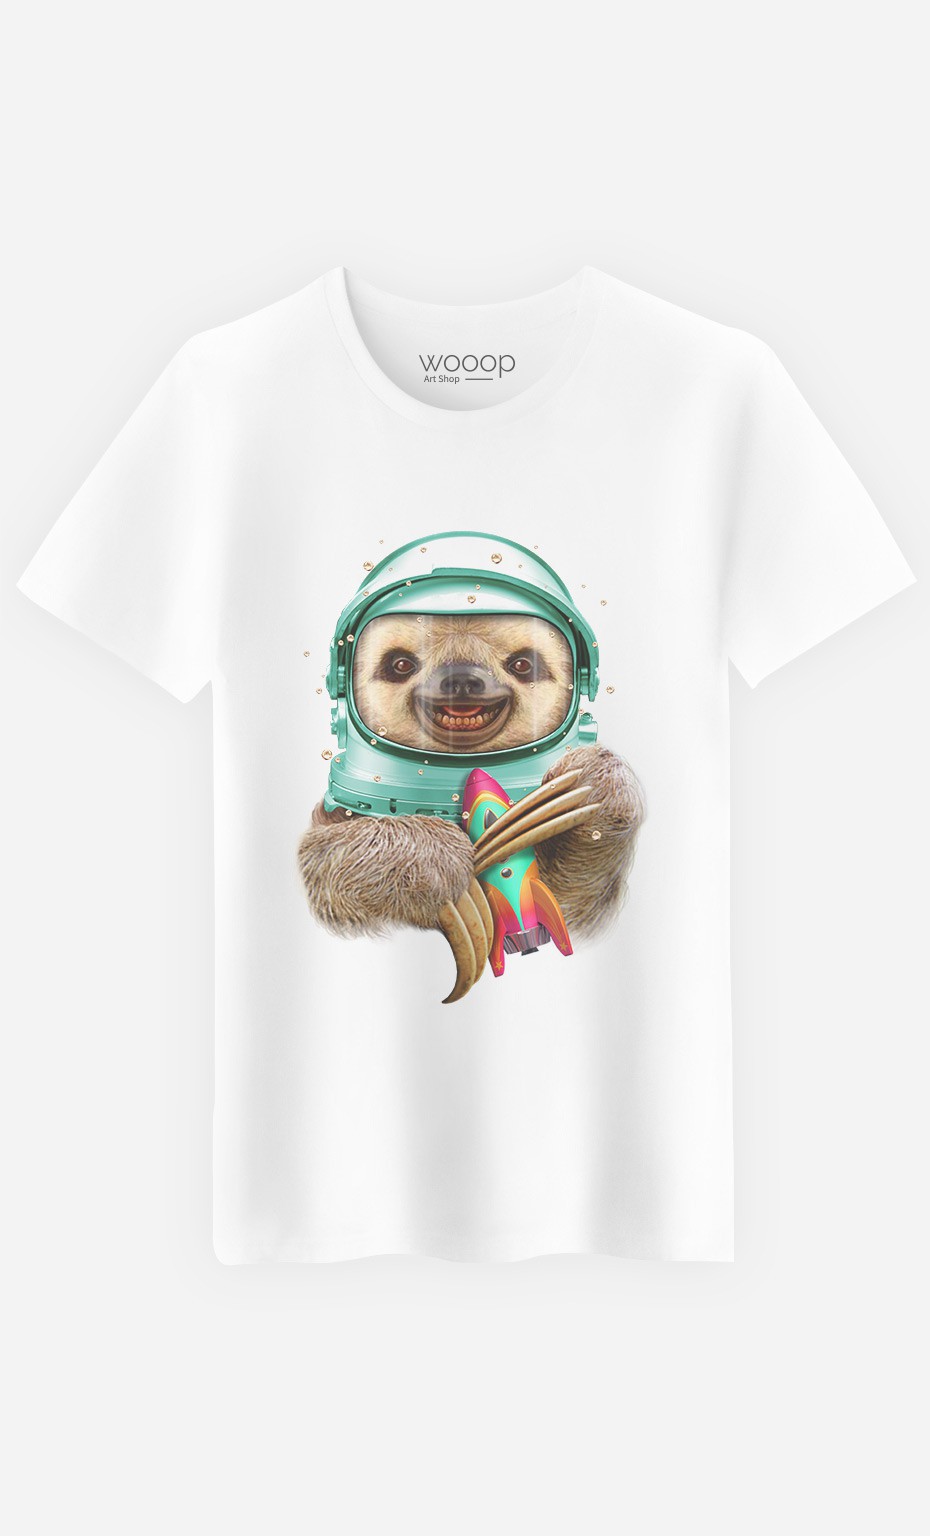 T-Shirt Space Sloth